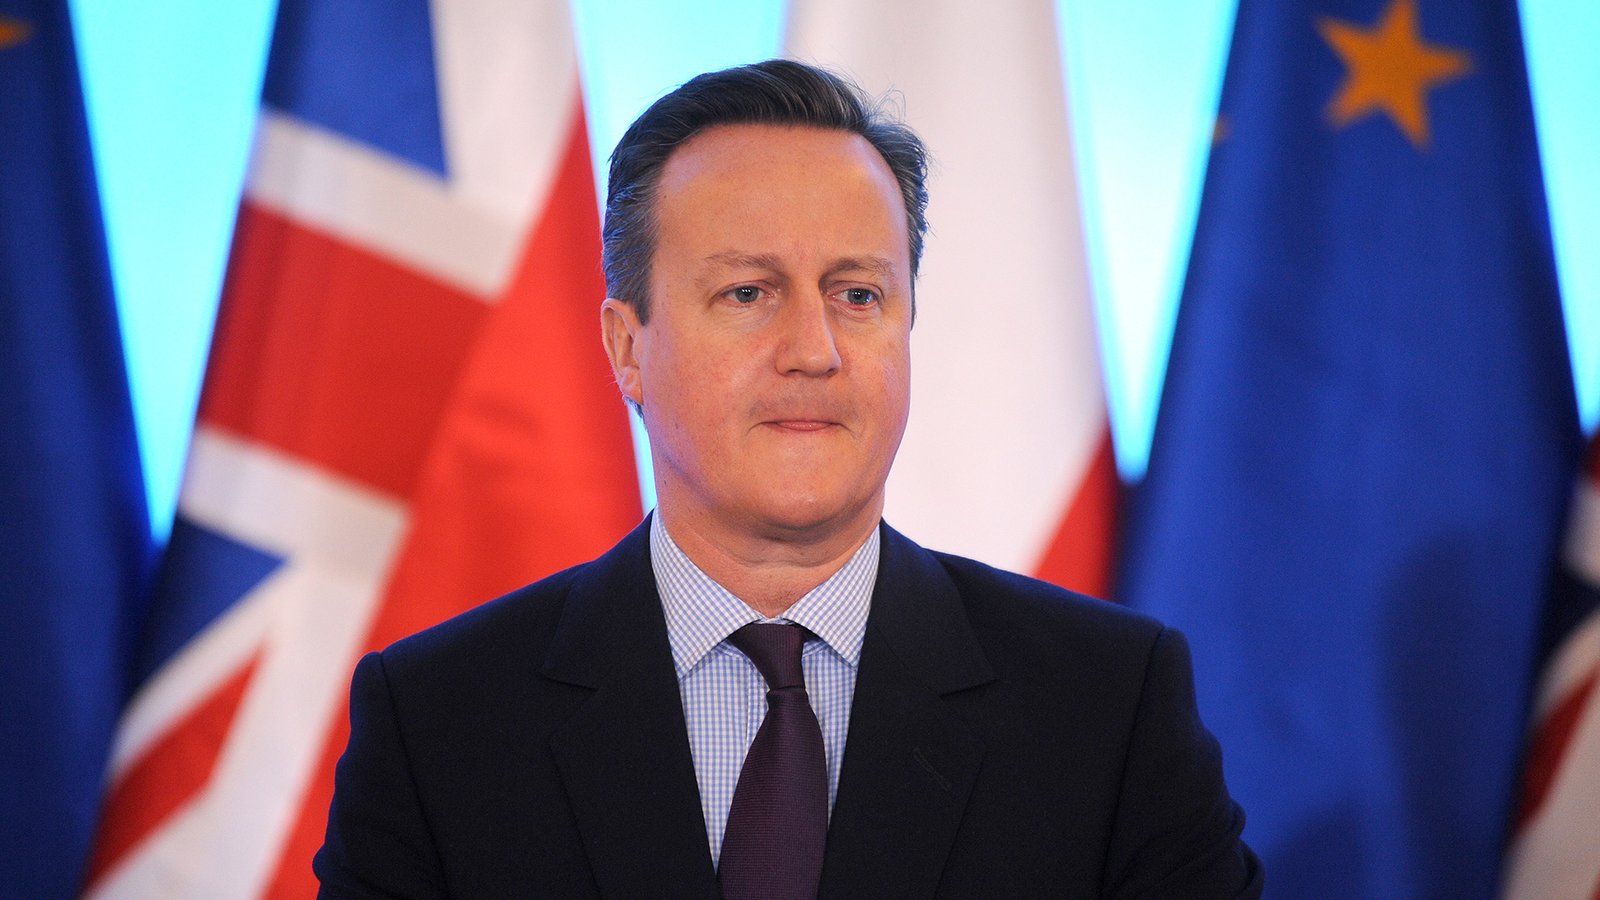 David Cameron says UK must engage with China